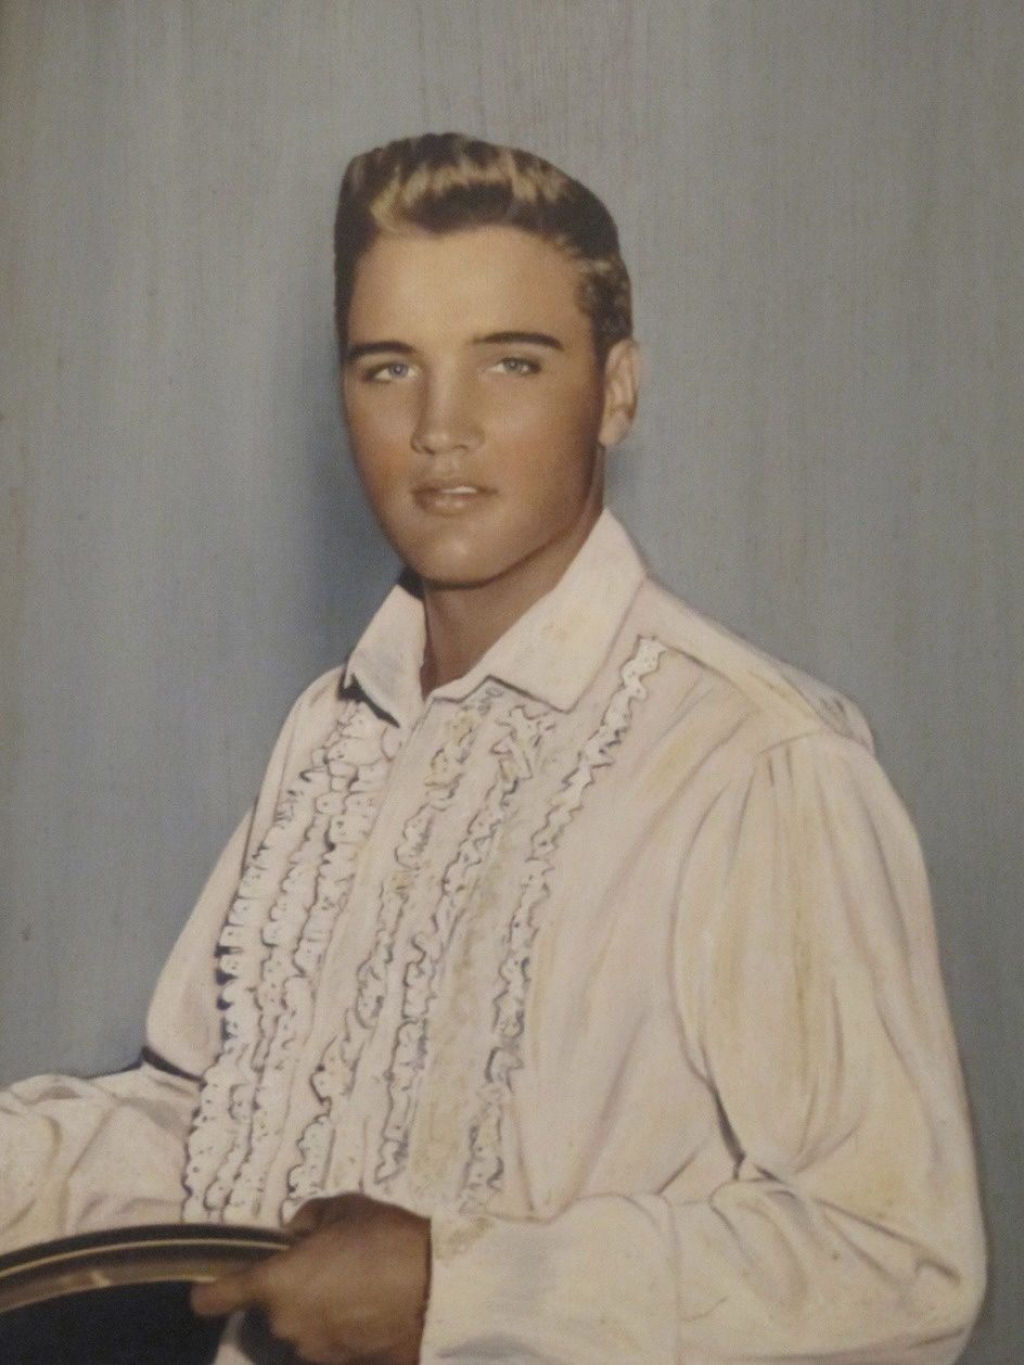 Fotos antigas de Elvis Presley mostram que ele era realmente loiro 06